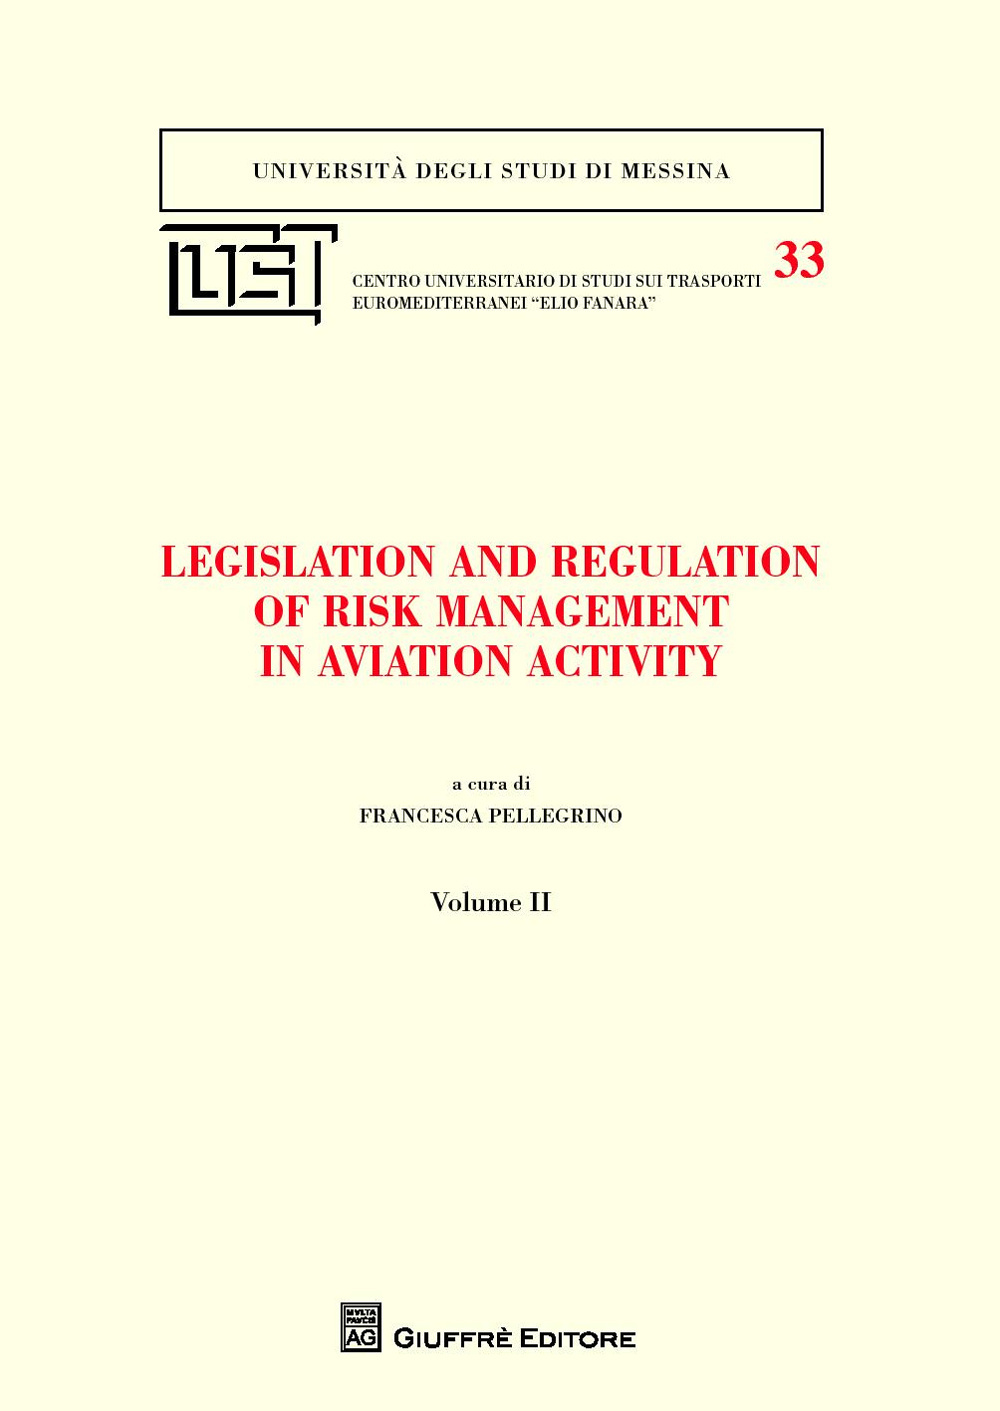 Legislation and regulation of risk management in aviation activity. Vol. 2